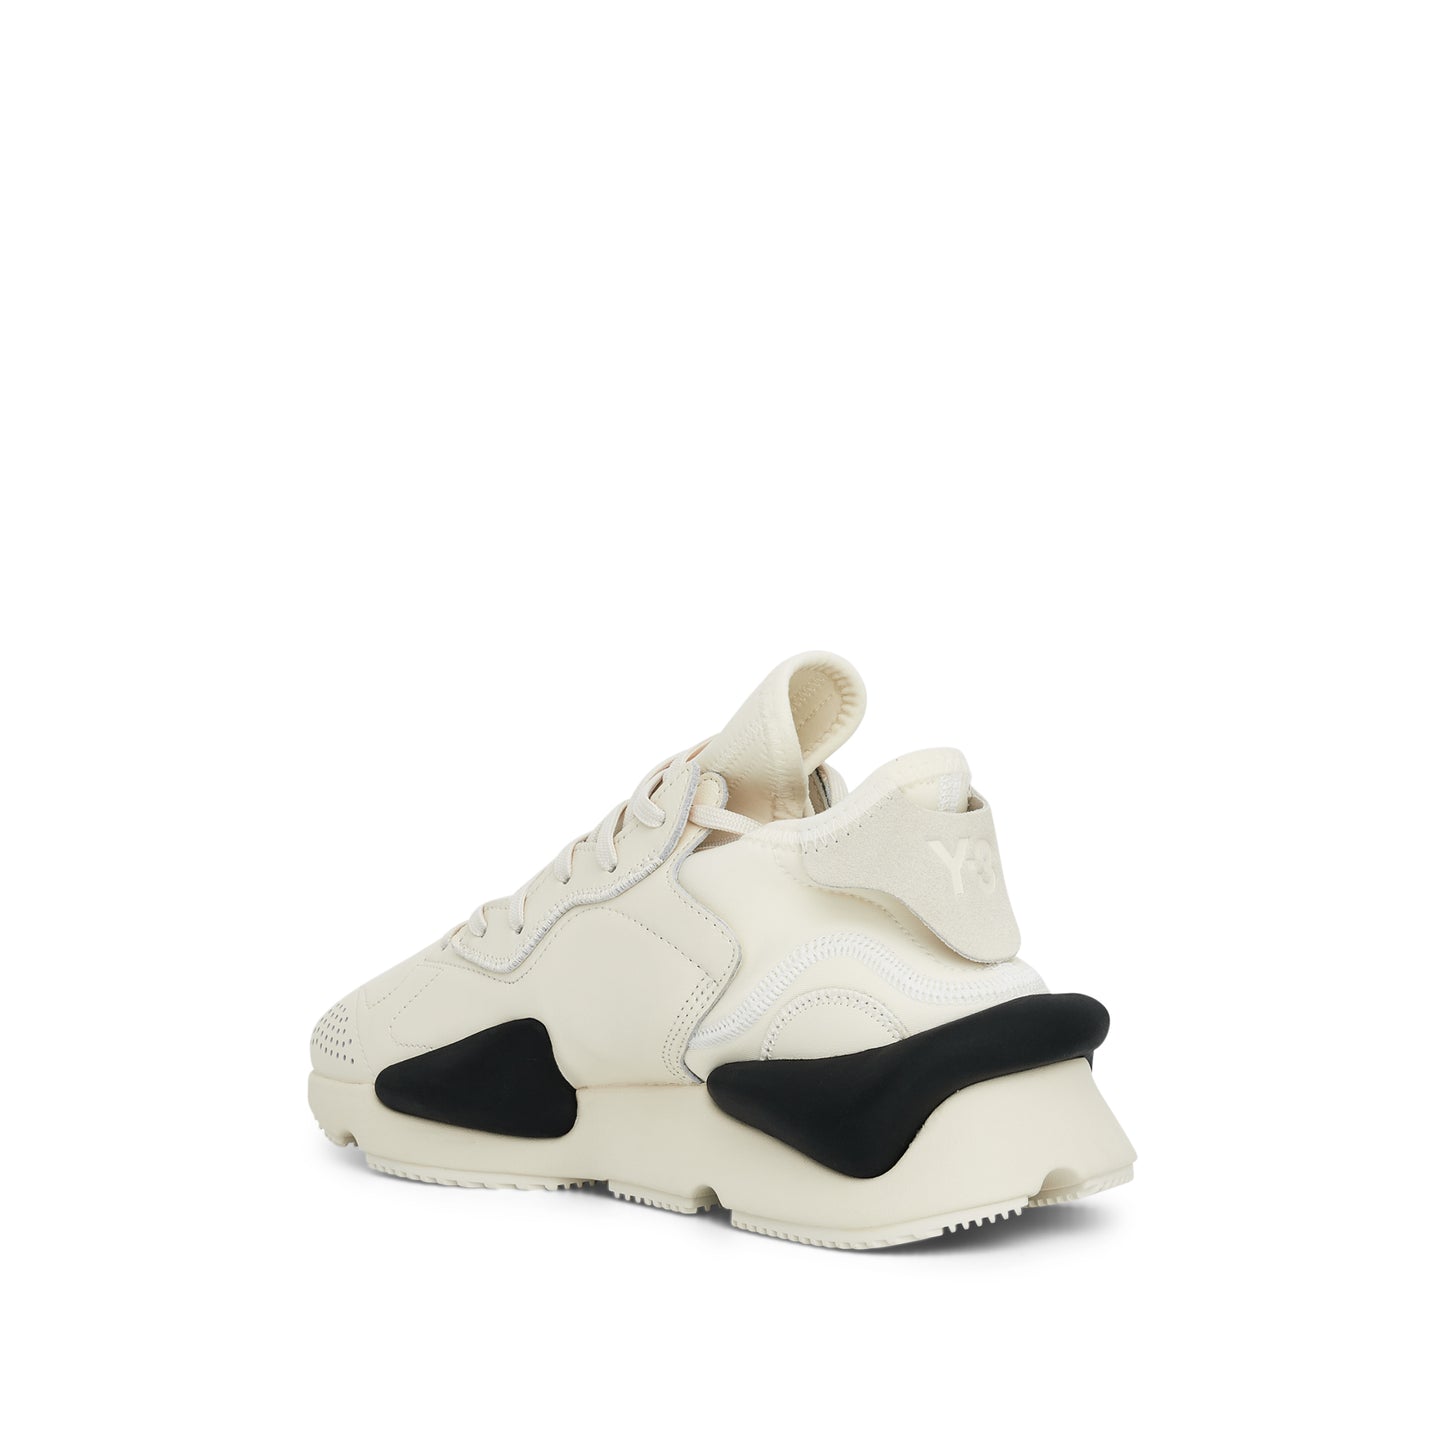 Kaiwa Sneaker in Cream White/Black